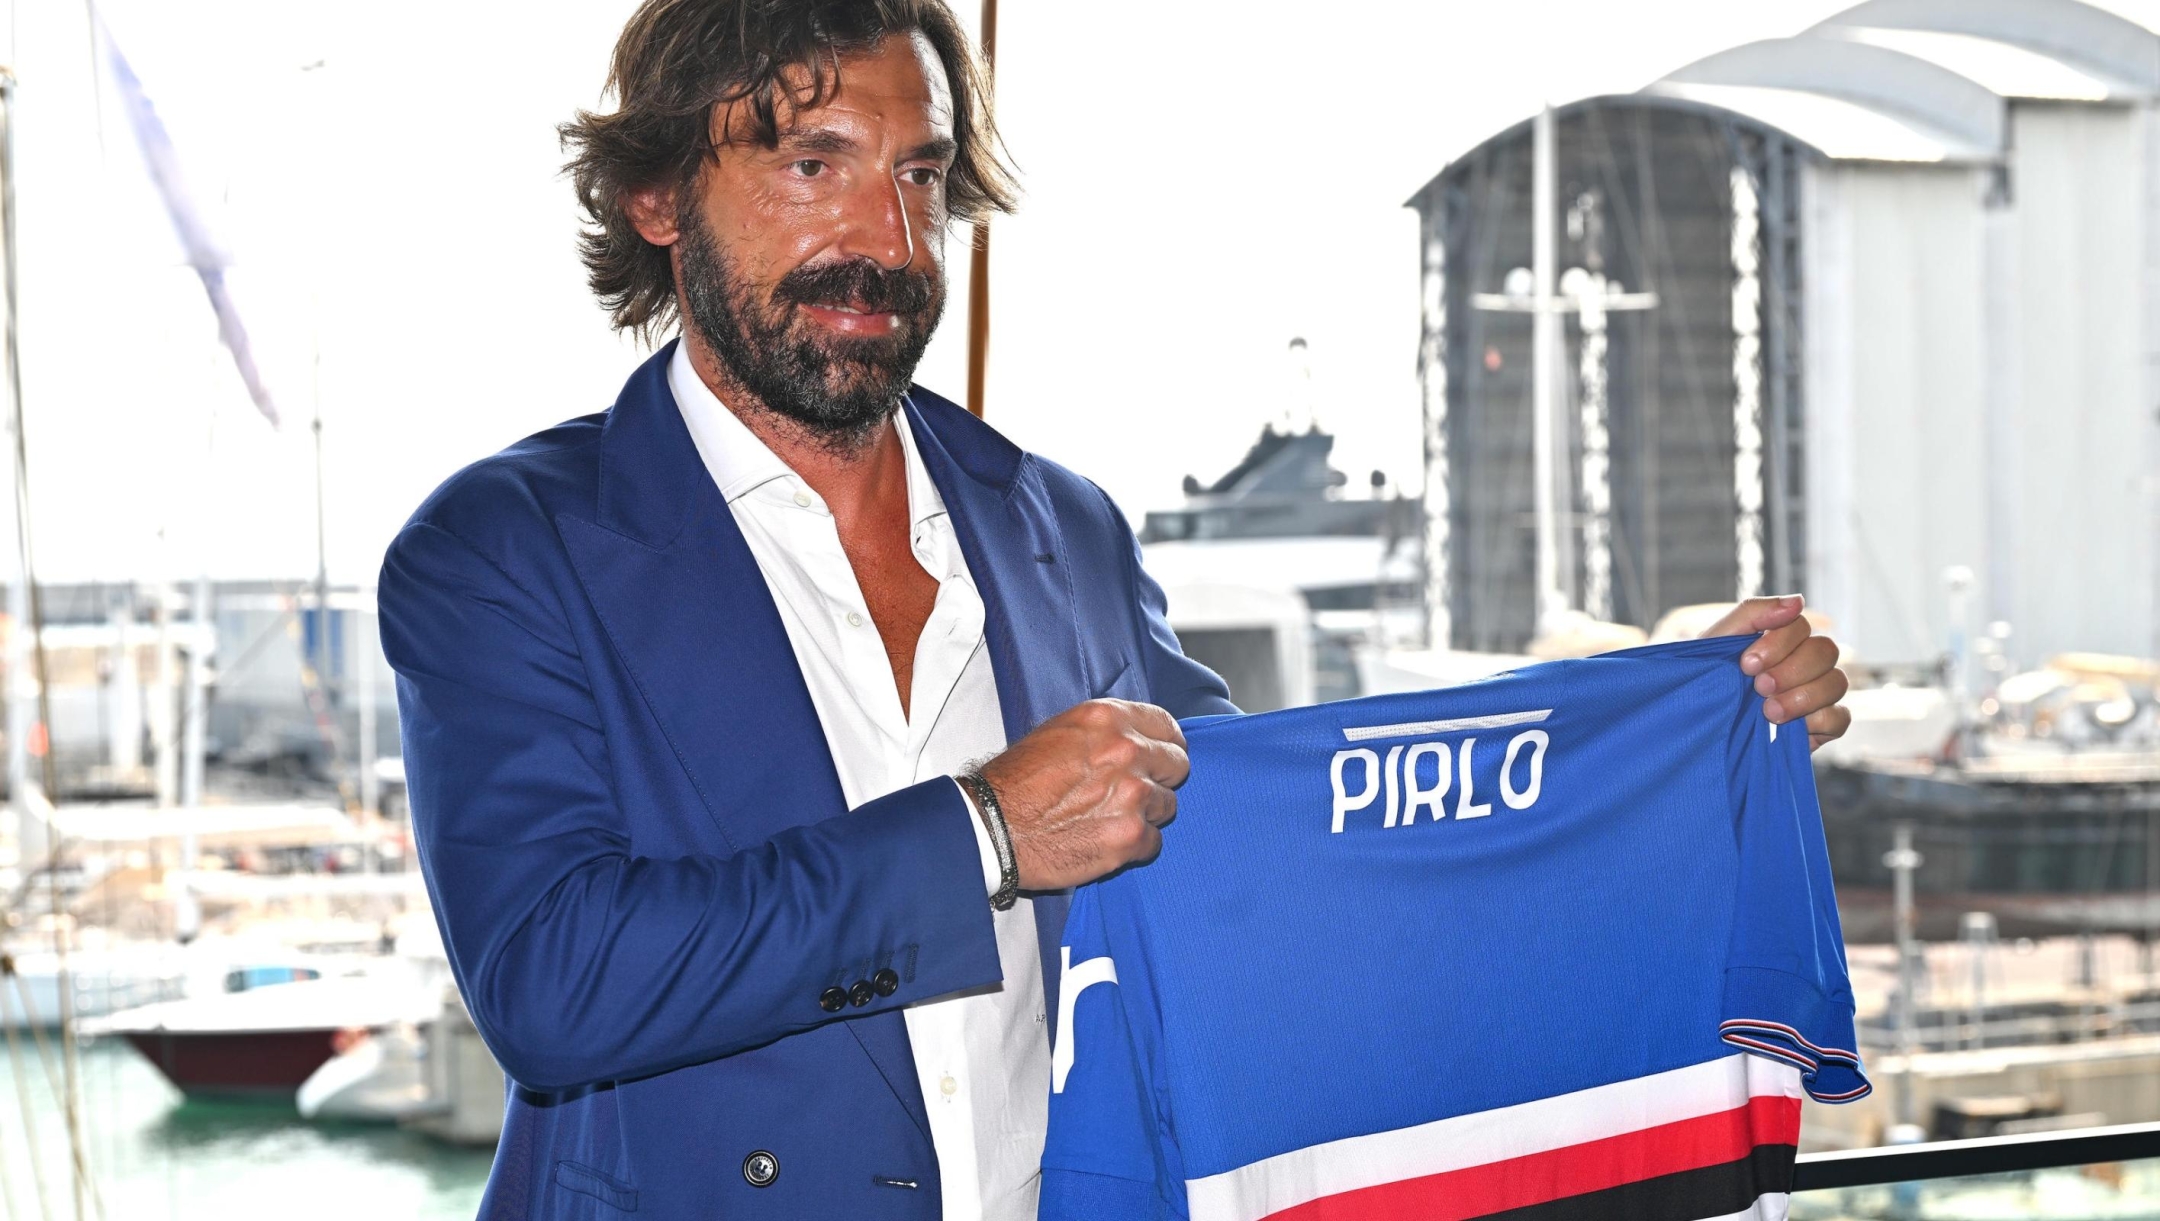 The new UC Sampdoria coach Andrea Pirlo during the presentation to the press, Genoa, Italy 28 June 2023. ANSA/LUCA ZENNARO